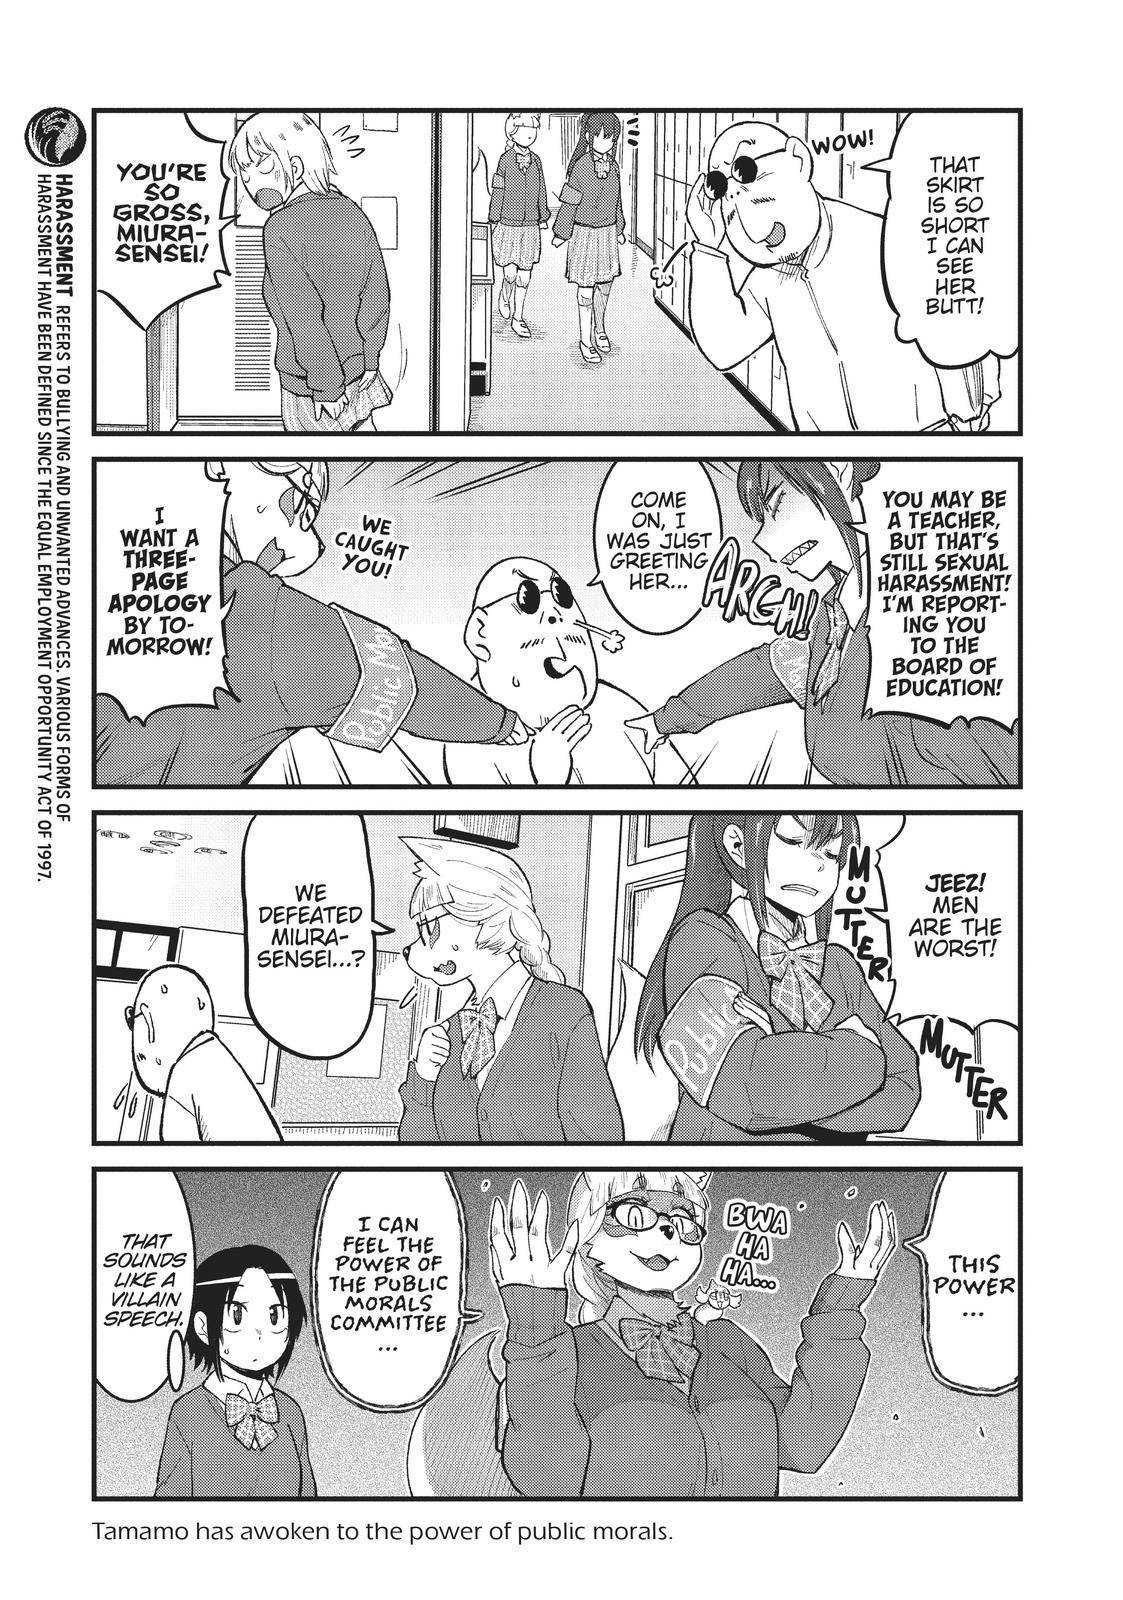 Tamamo-chan's a Fox! - chapter 42 - #5